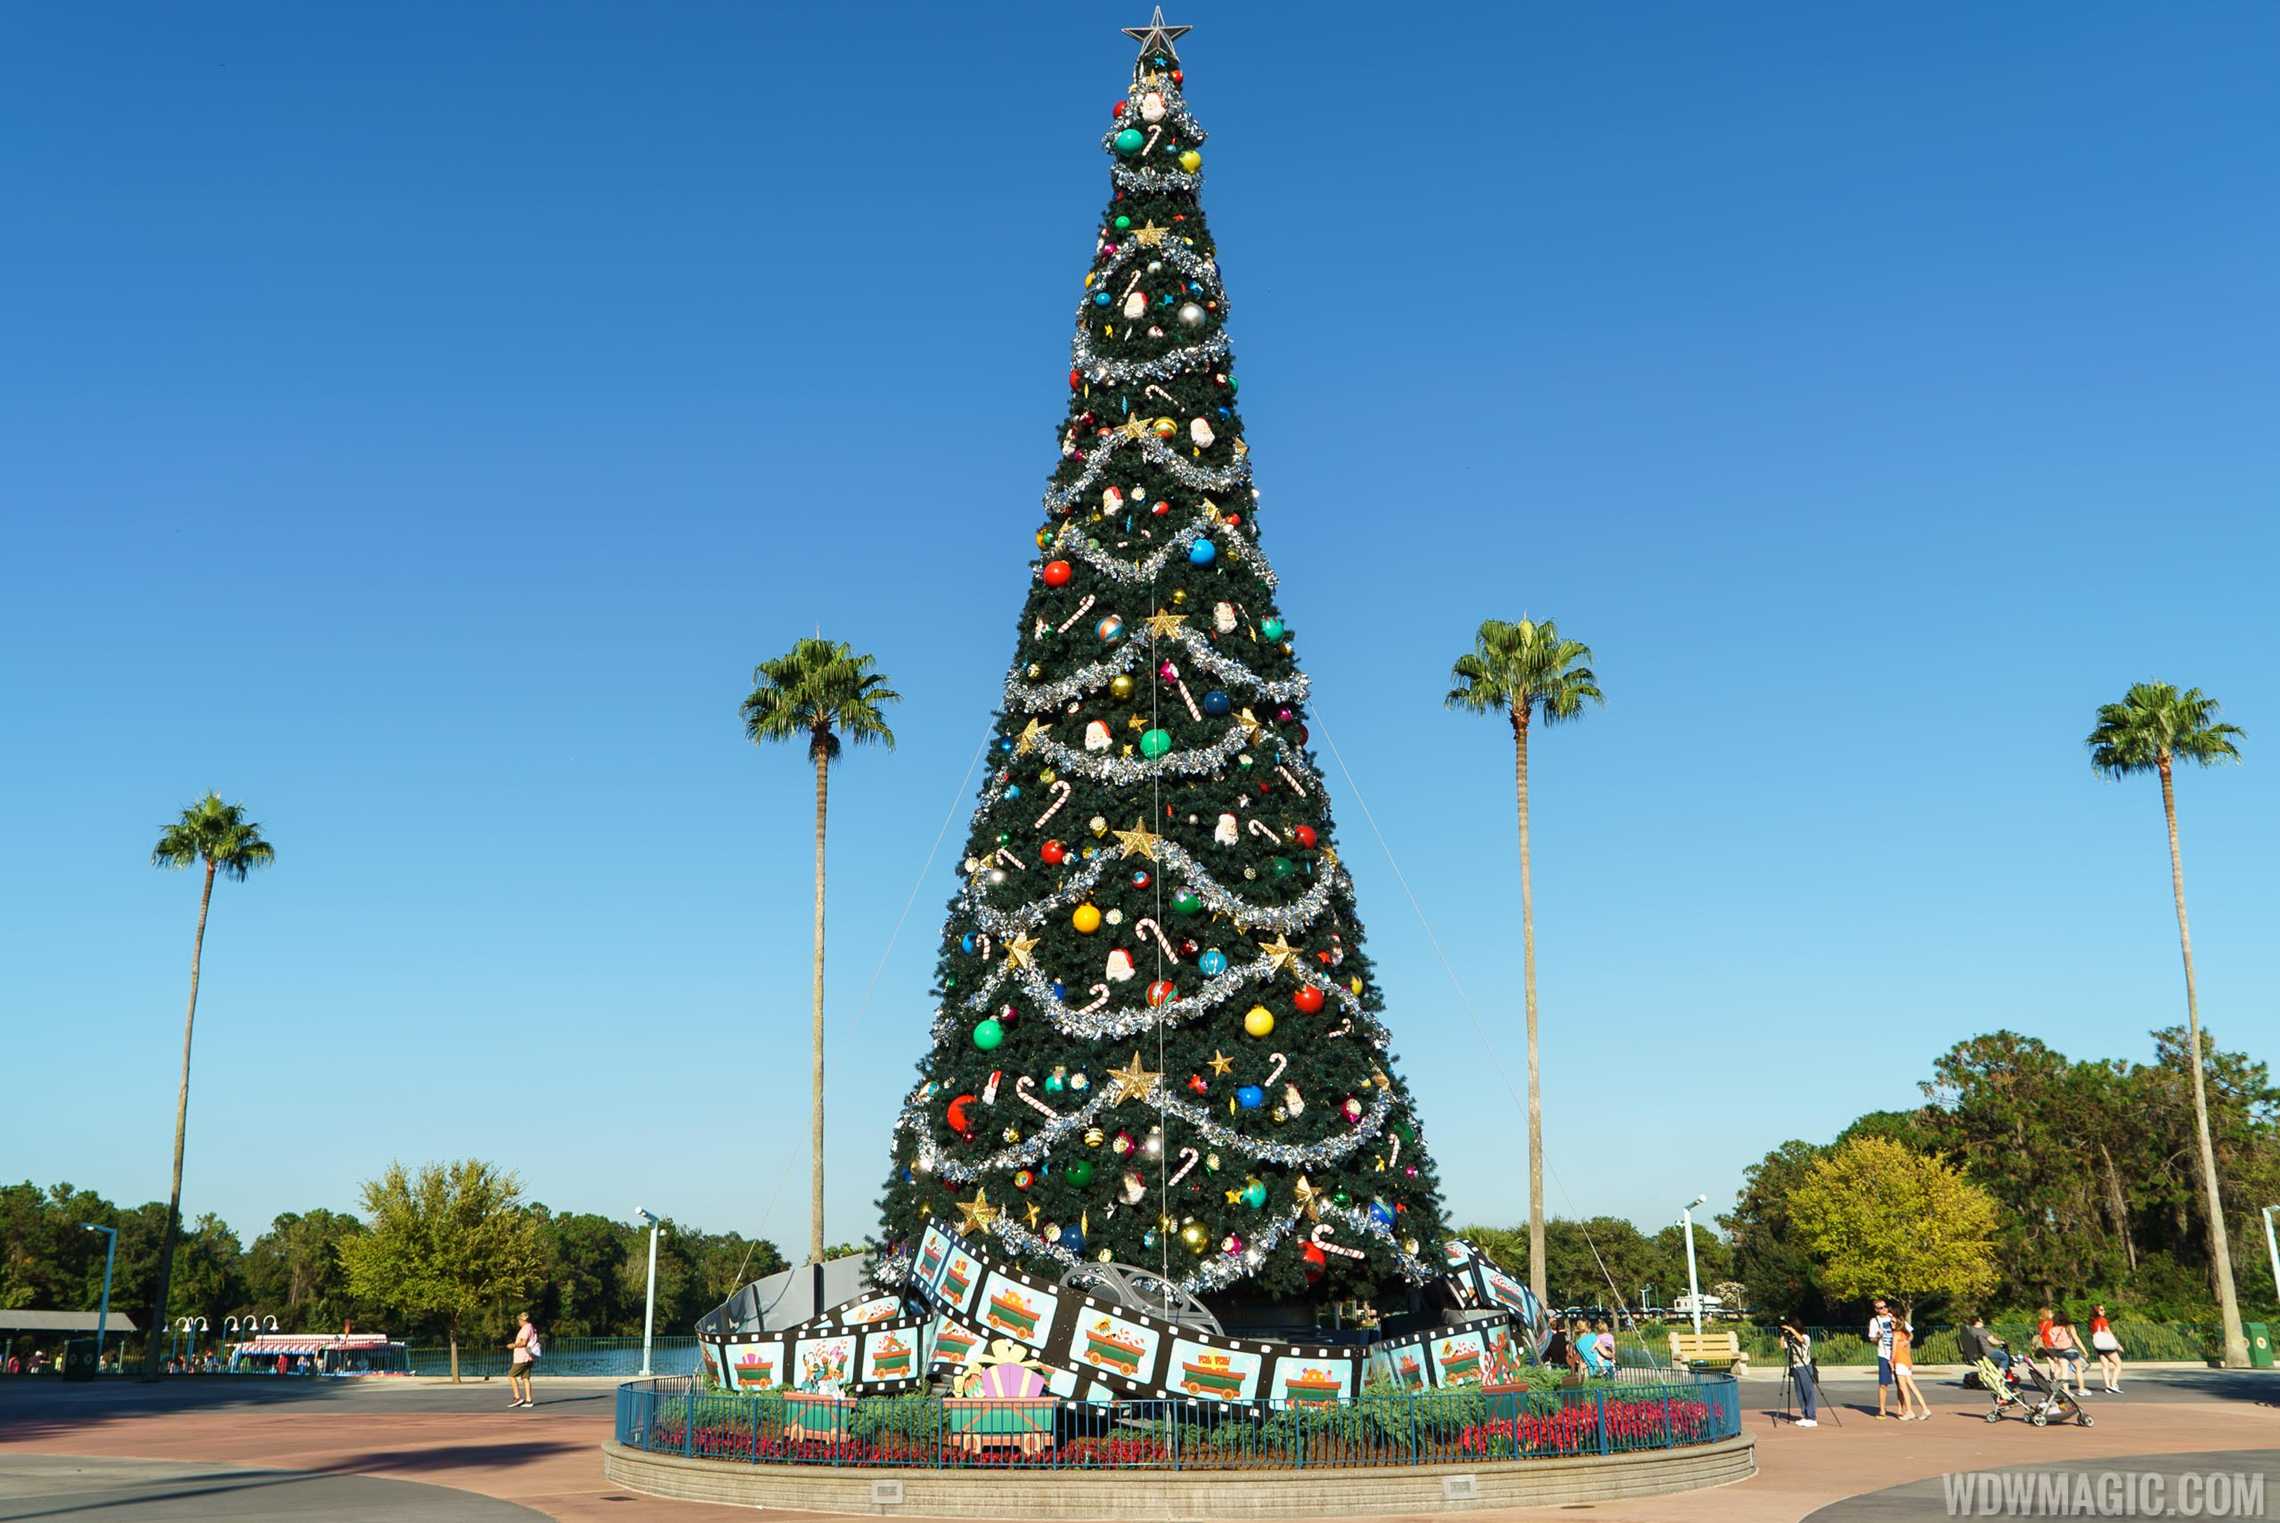 Disney's Hollywood Studios holiday decorations 2015 - Photo 1 of 20